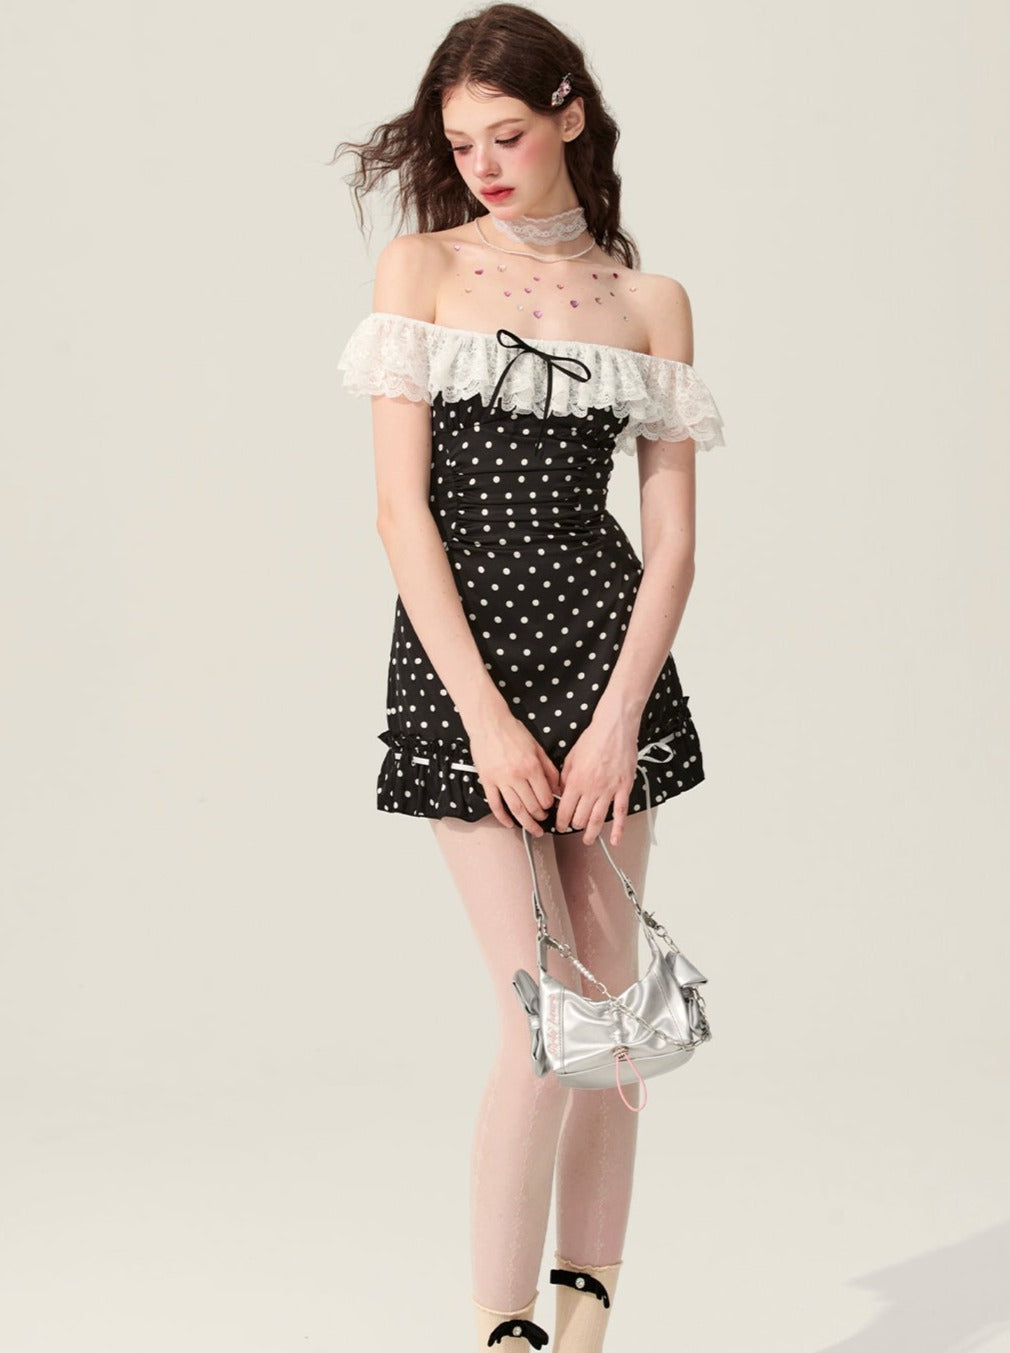 [En vente le 31 mai à 20 heures] less eyes black mulberry berry one-word shoulder polka dot black dress lace